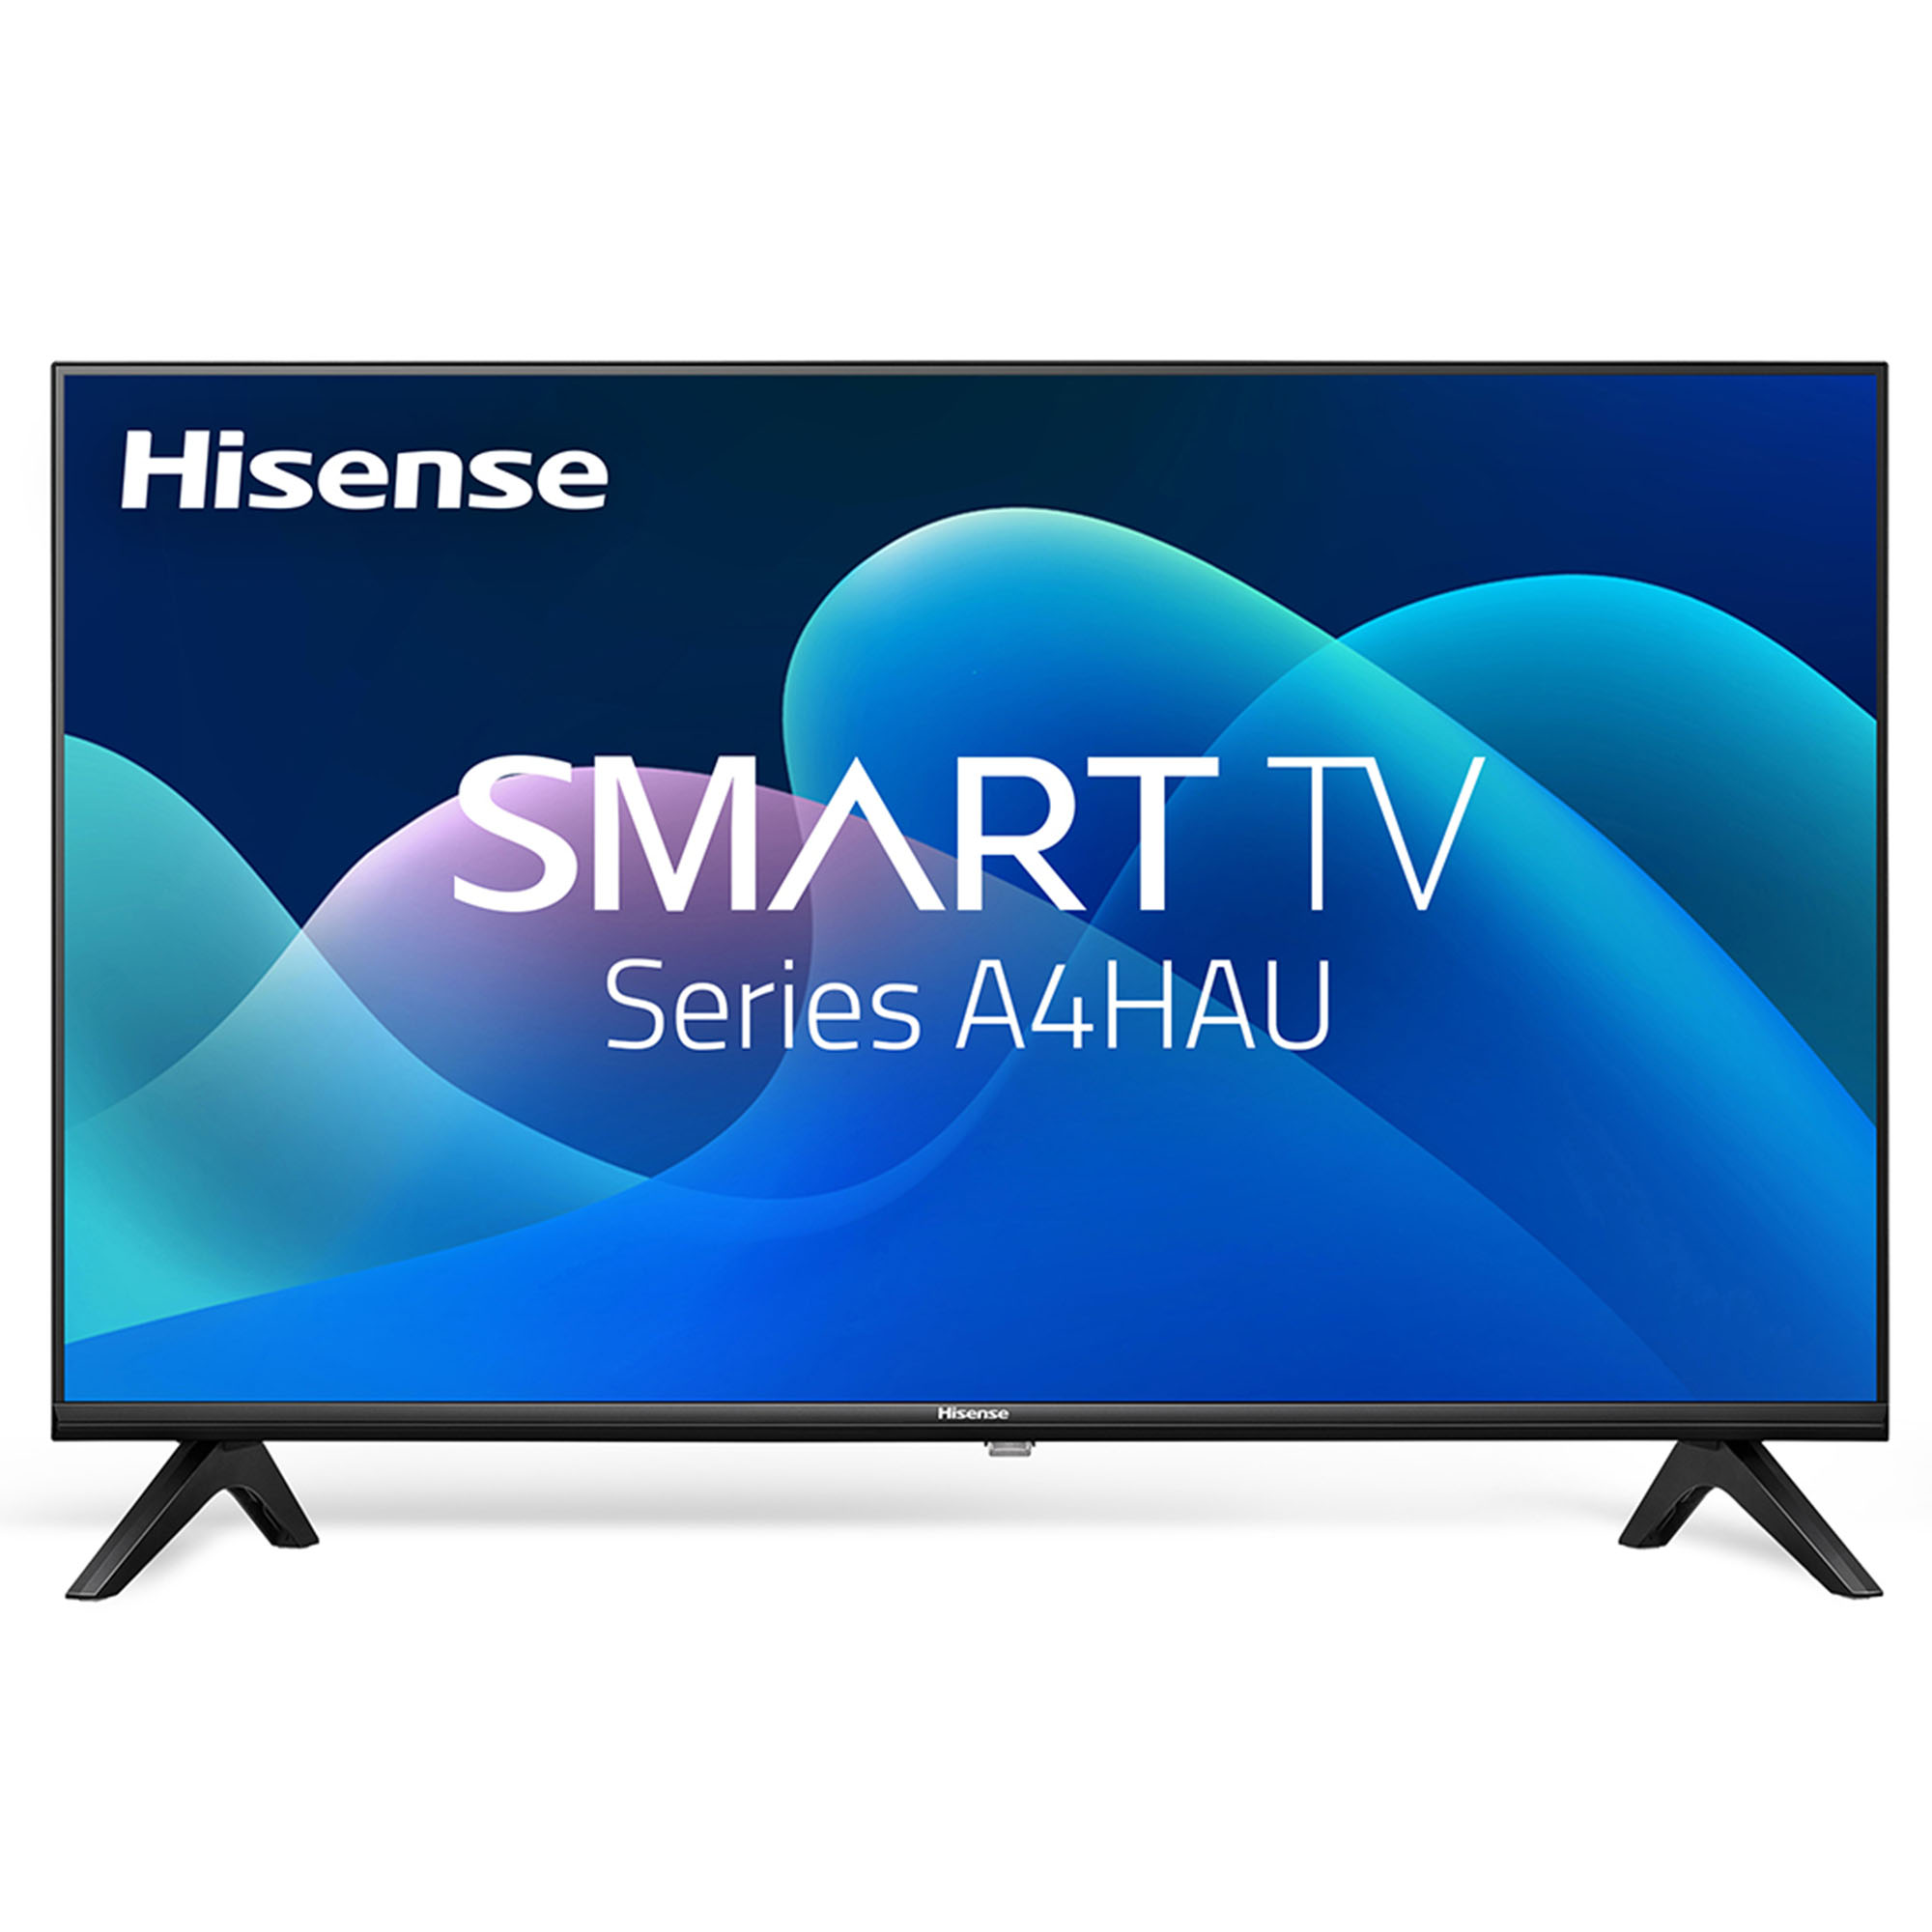 Hisense 43A4H 43 inch FHD Smart TV - Hisense Kenya